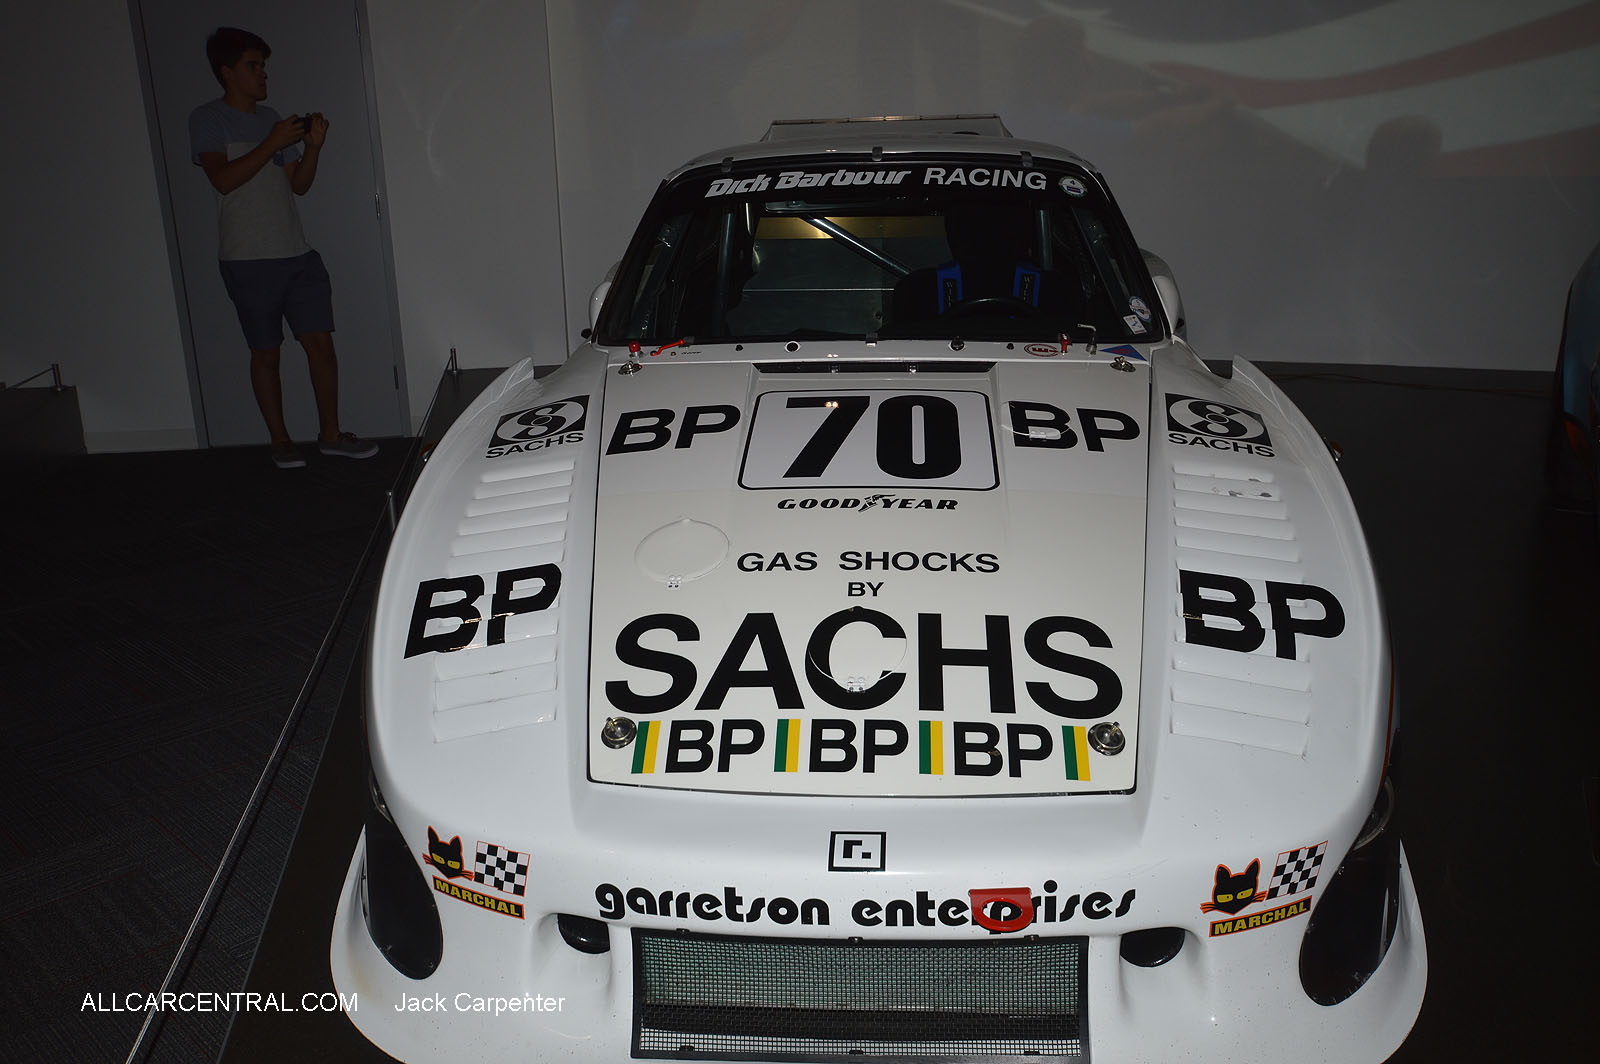   
Porsche 935K3 1980  Petersen Automotive Museum 
2016